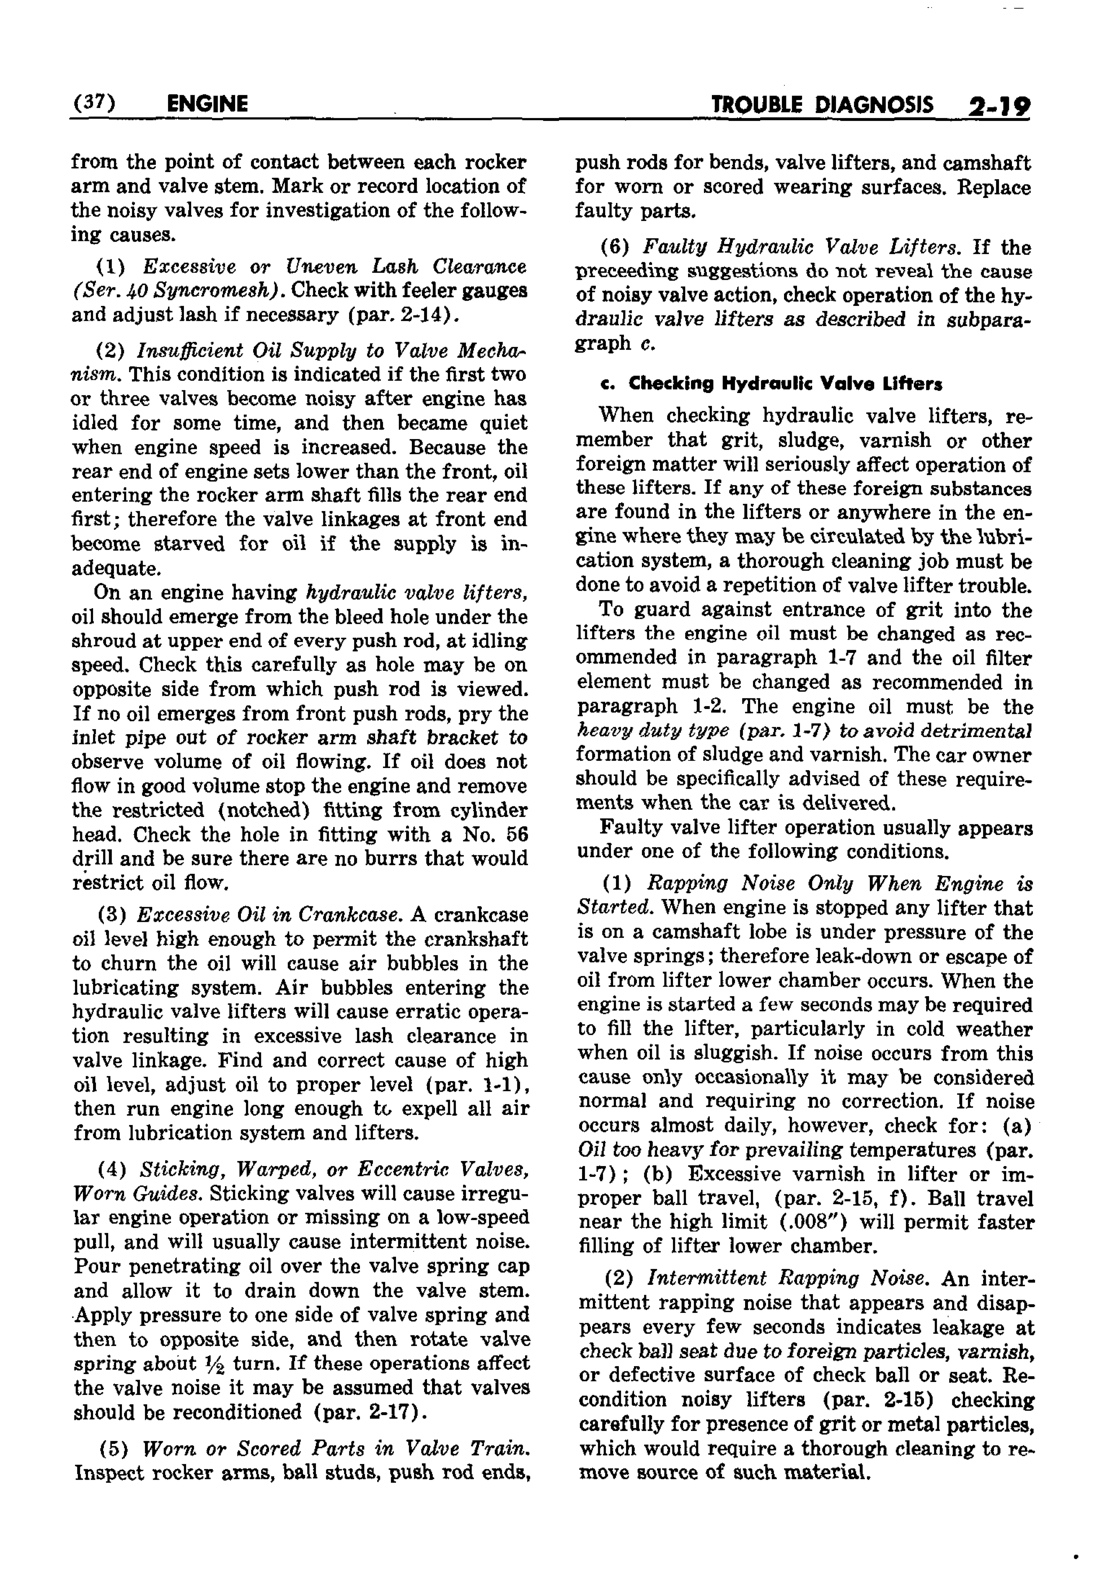 n_03 1952 Buick Shop Manual - Engine-019-019.jpg